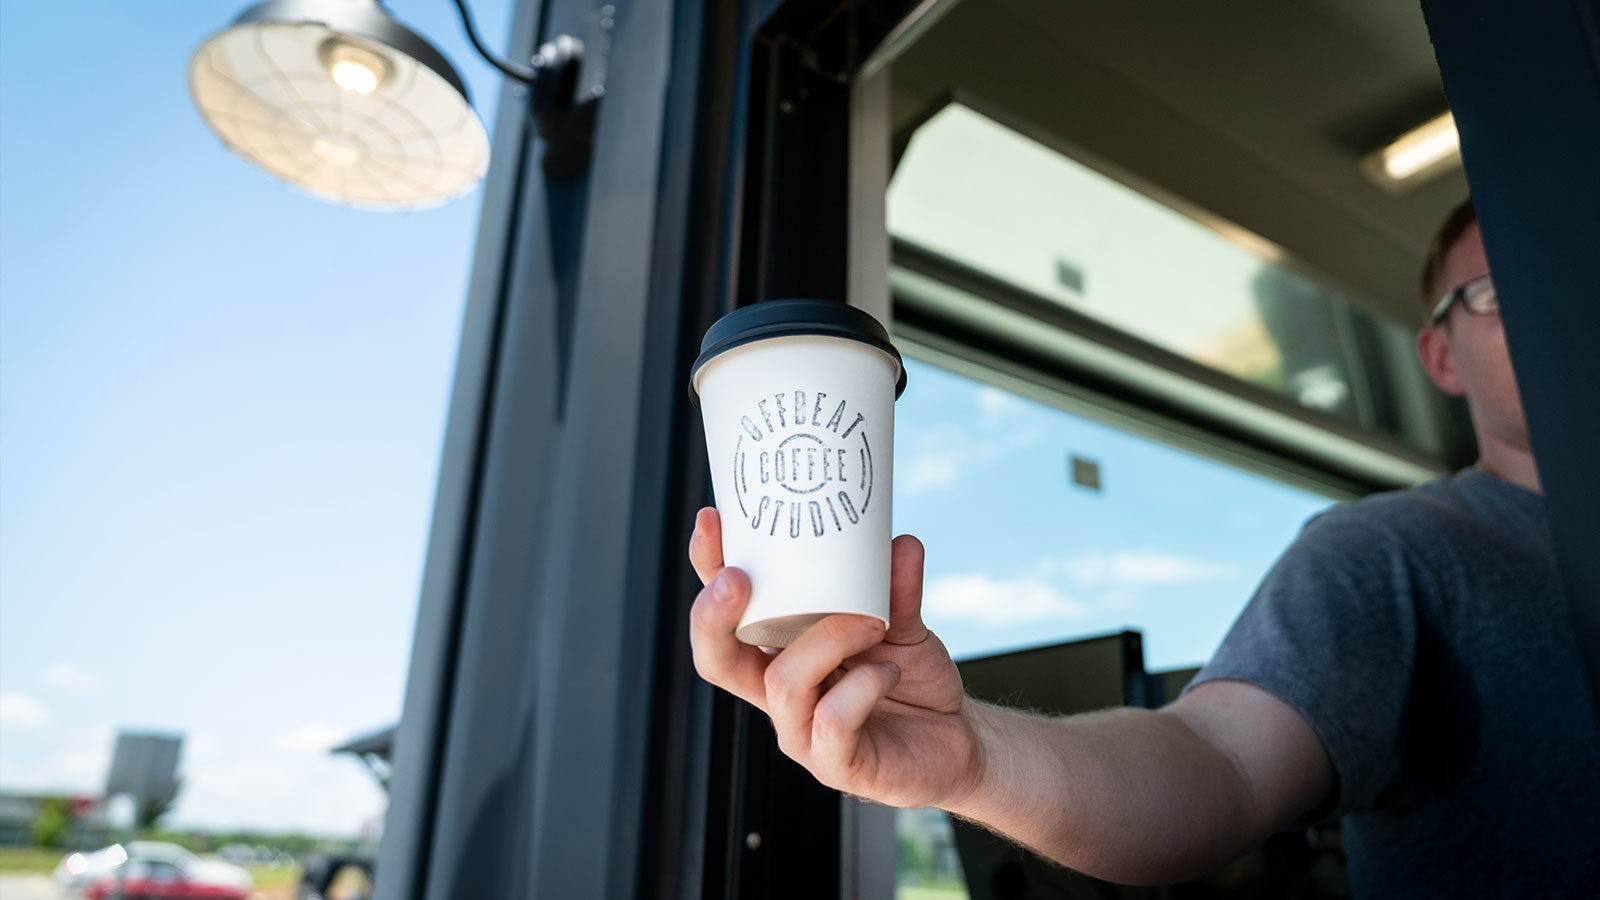 Offbeat Coffee Studio Featuring Drive-Thru Service Coming to Redstone Gateway